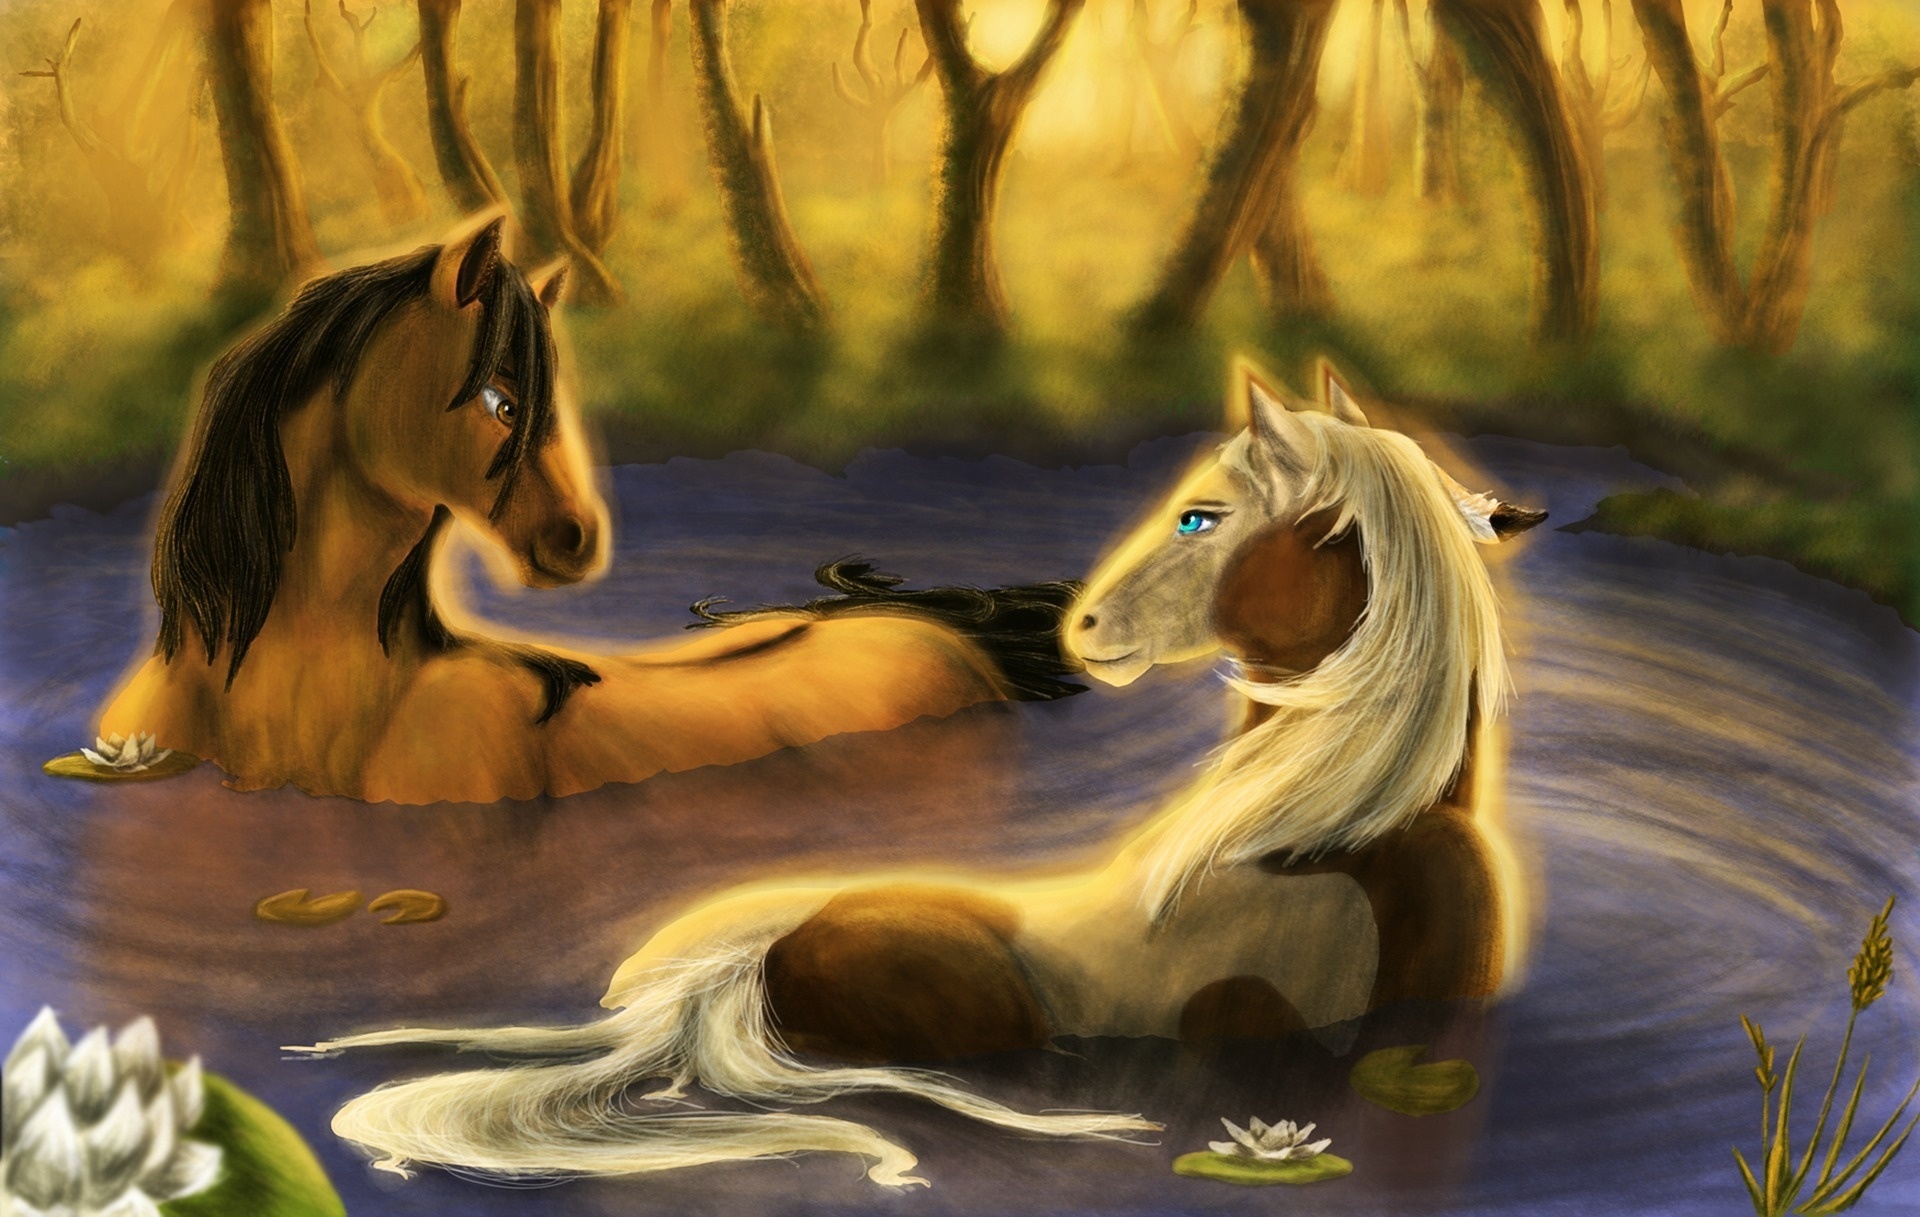 Movie Spirit: Stallion of the Cimarron HD Wallpaper | Background Image